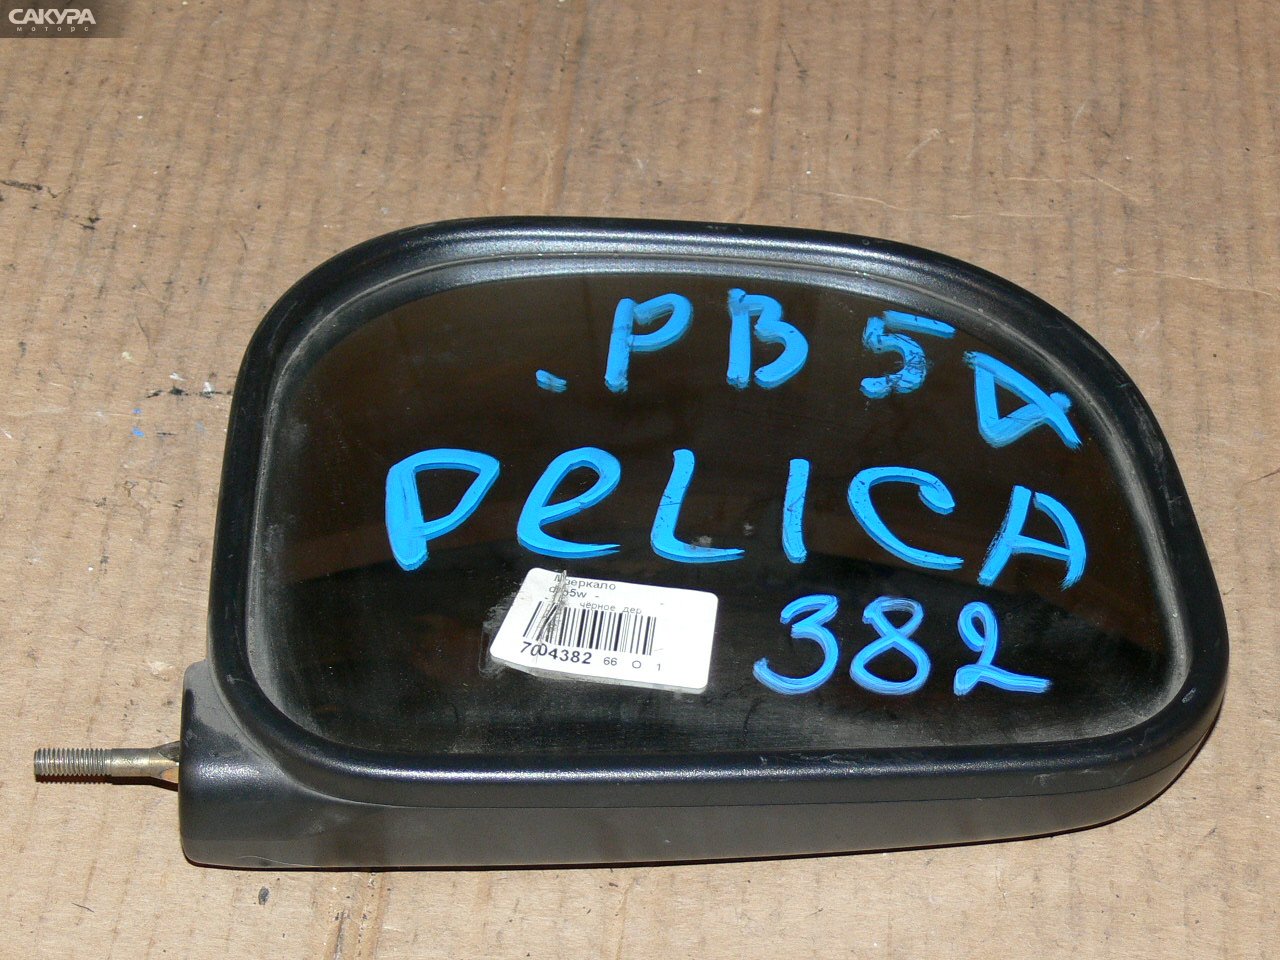 Зеркало боковое левое Mitsubishi Delica PB5V: купить в Сакура Иркутск.